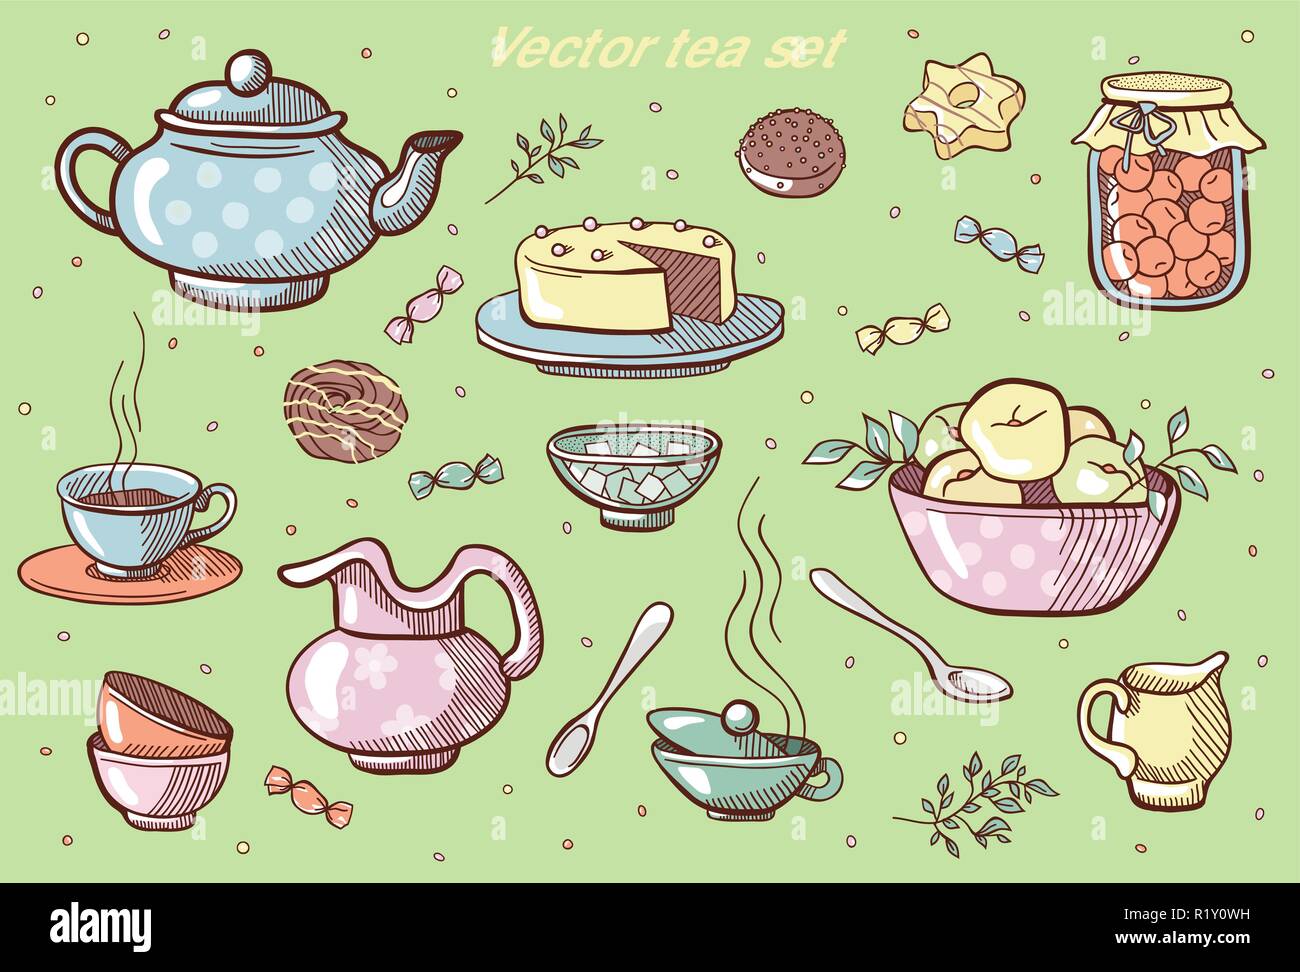 https://c8.alamy.com/comp/R1Y0WH/vector-sweets-tea-set-sweets-collection-tea-illustration-R1Y0WH.jpg